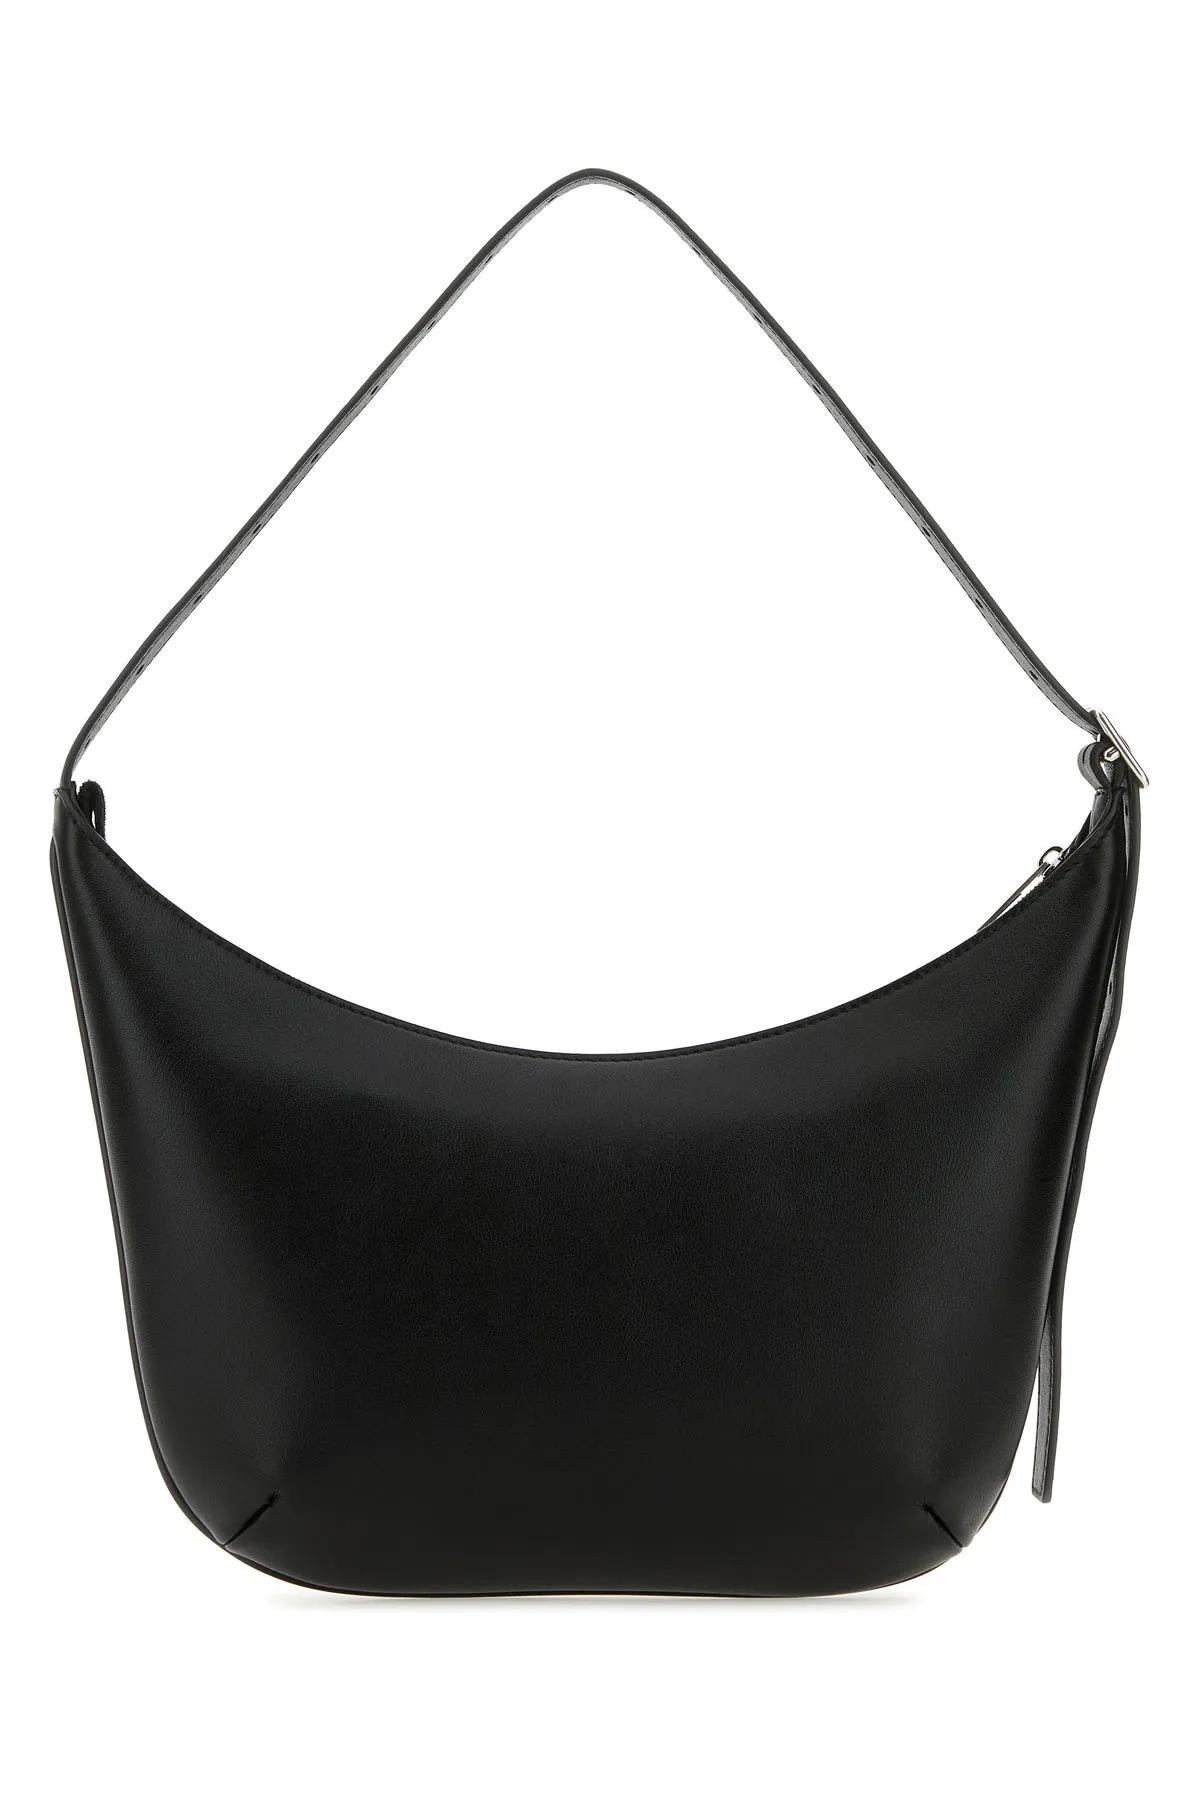 Shop Balenciaga Black Leather Mary-kate Shoulder Bag